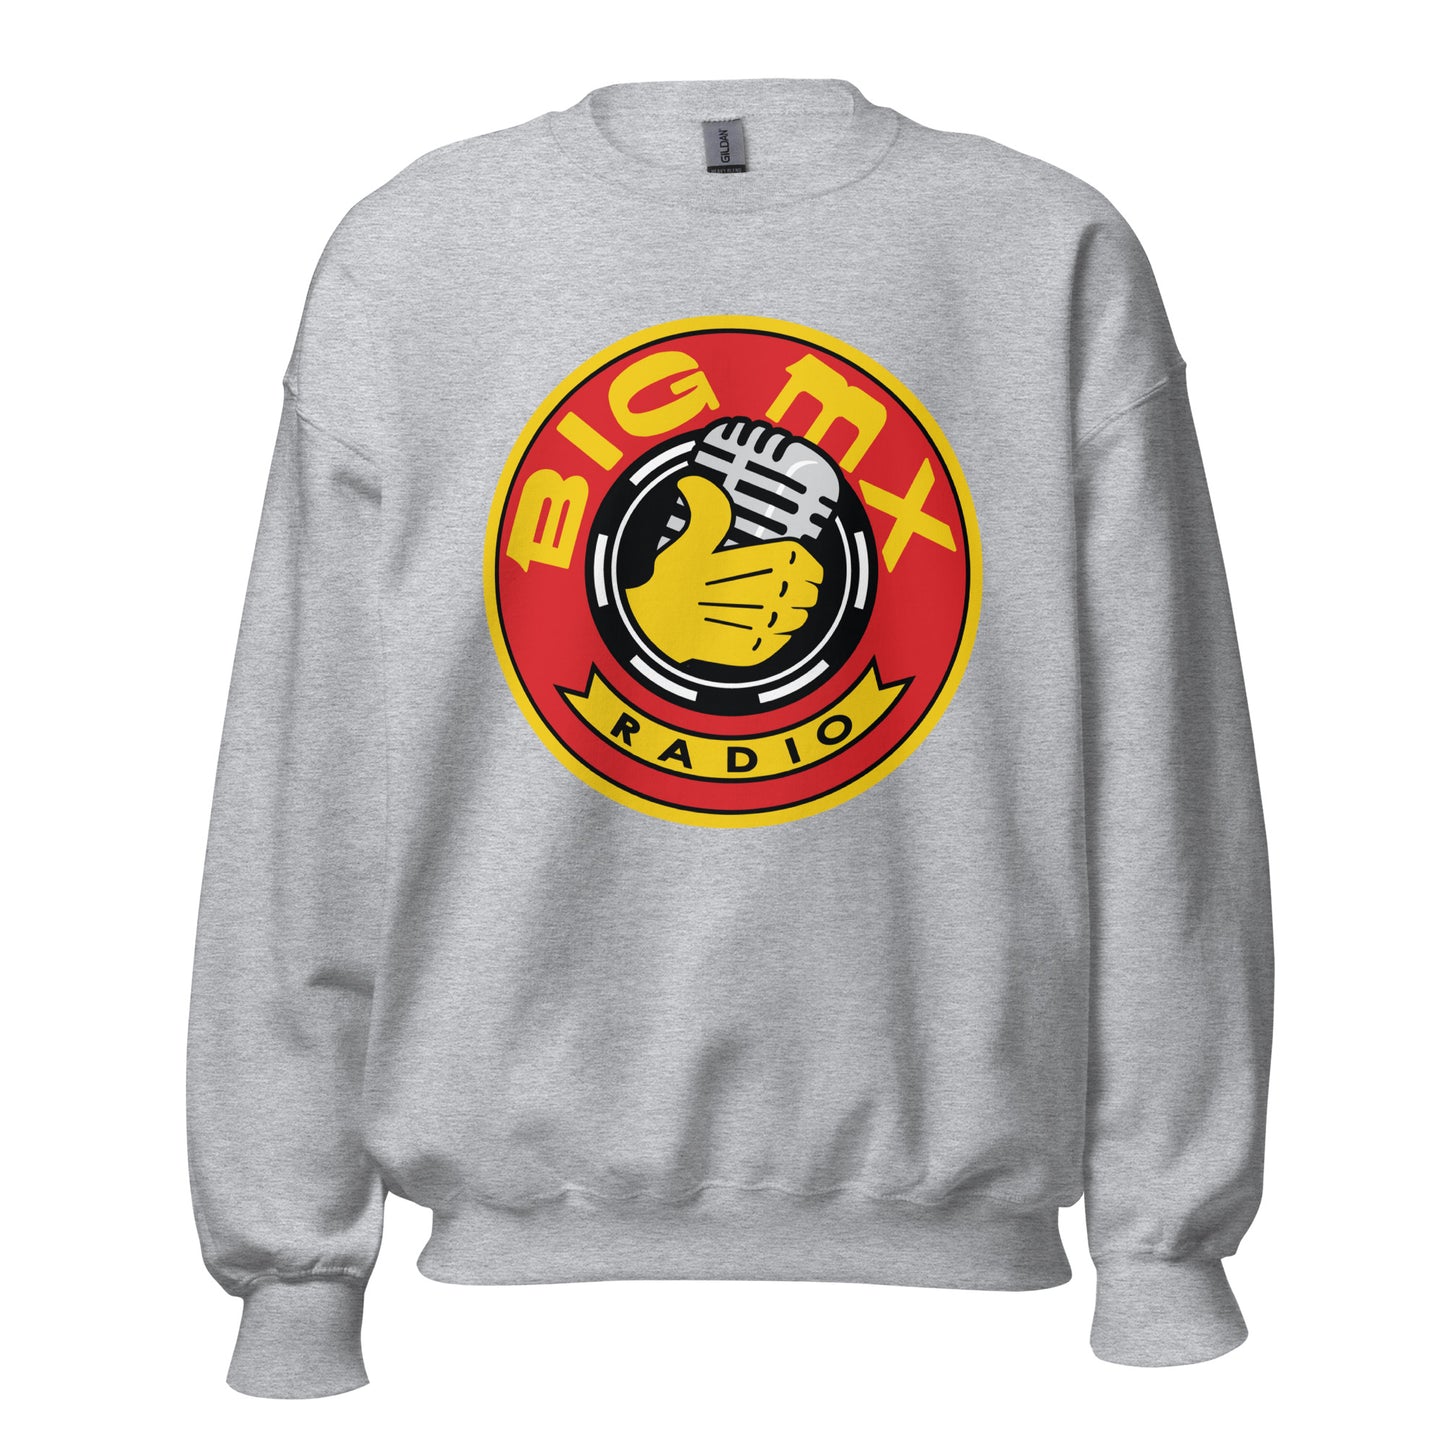 Big MX Radio Crewneck Sweater